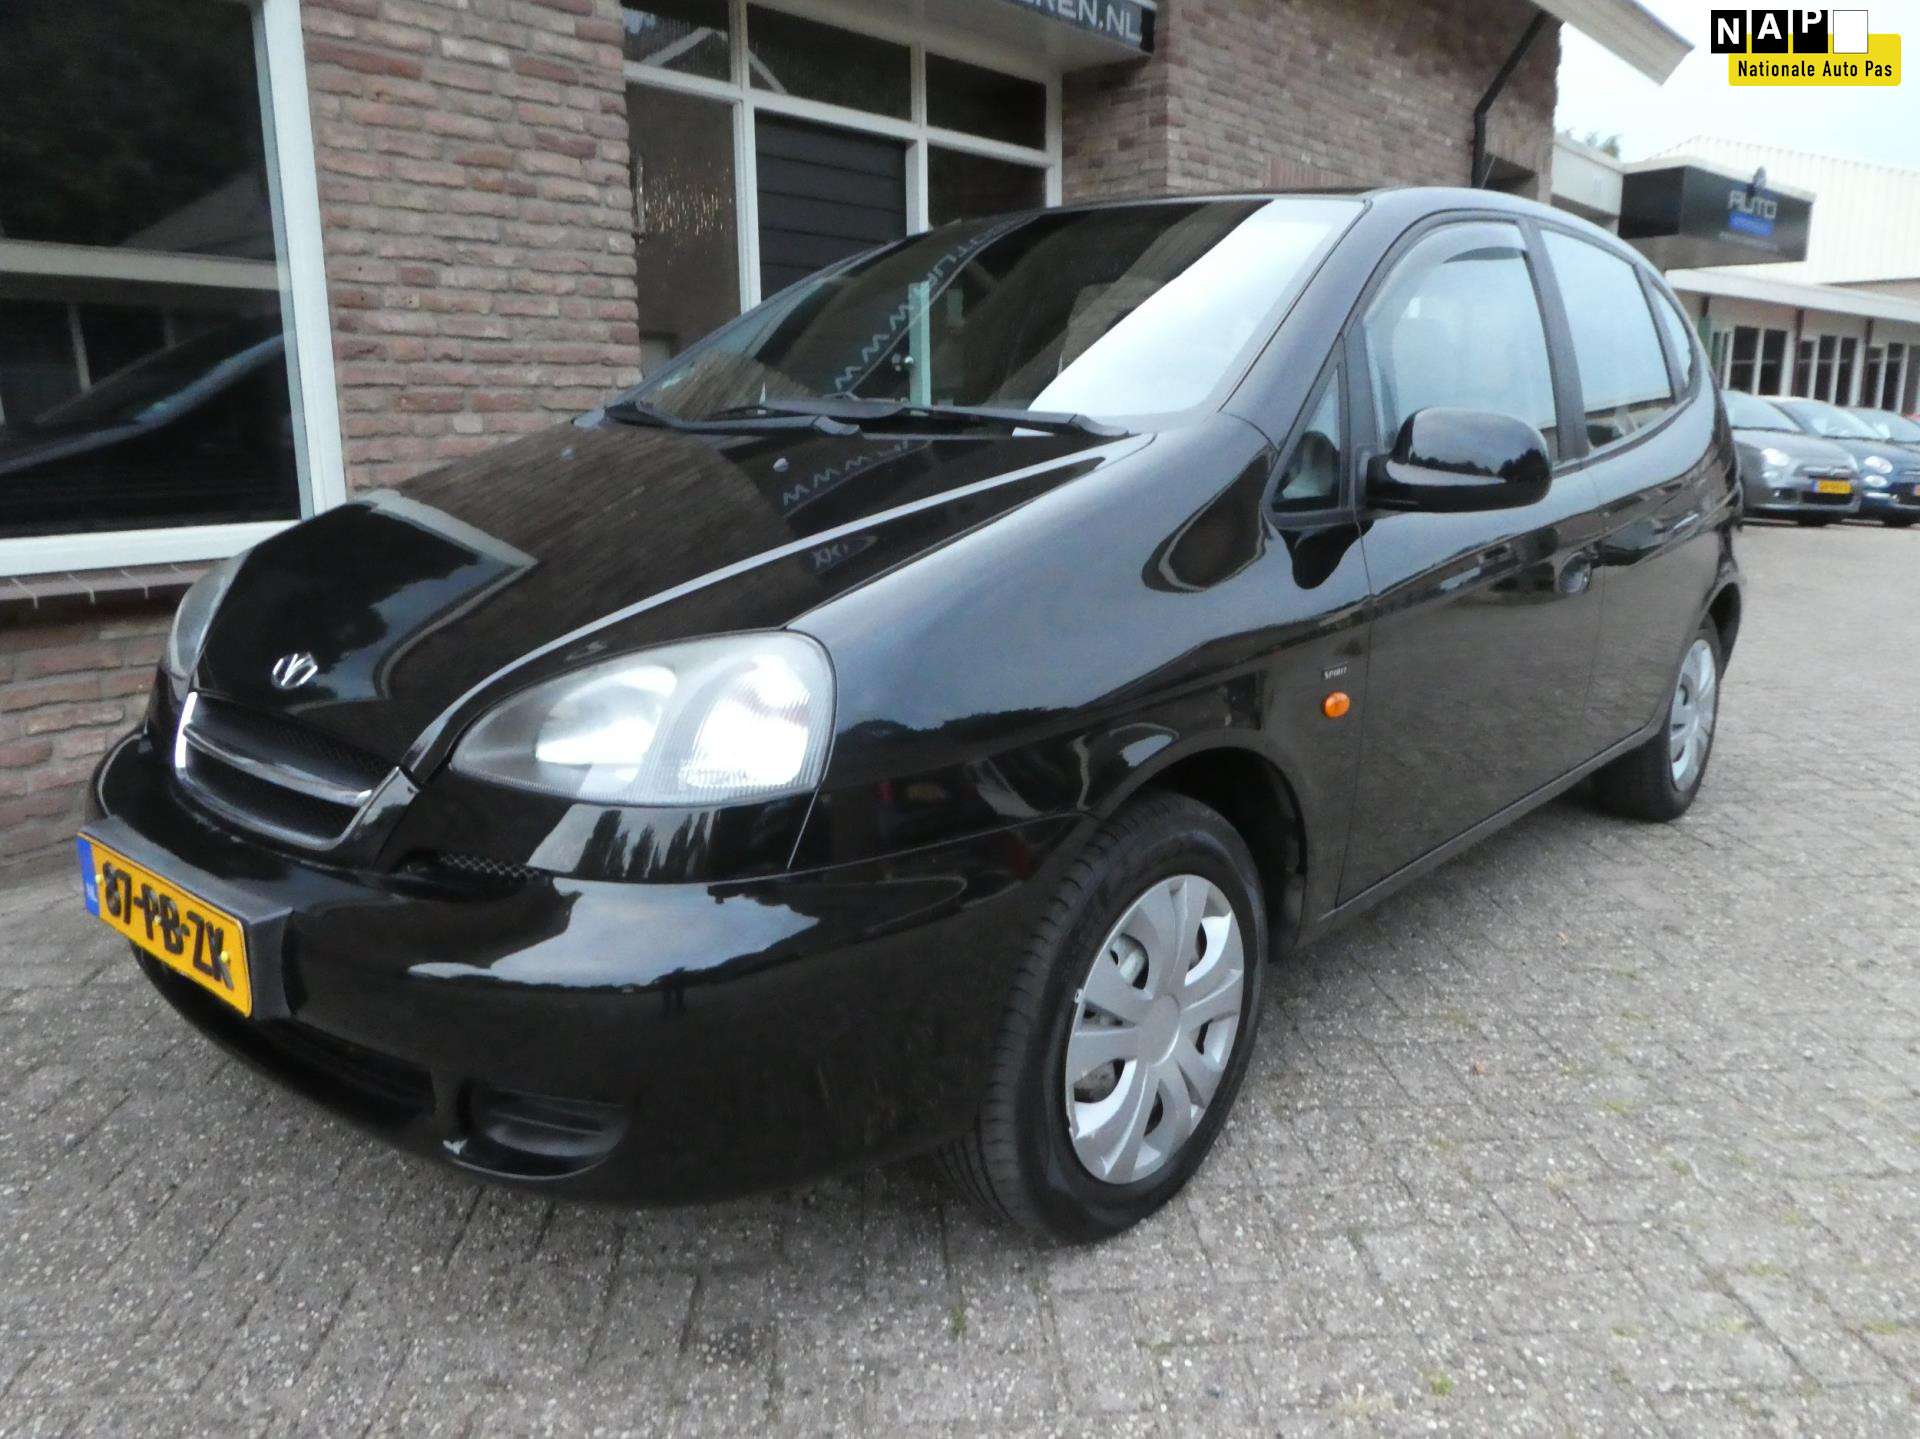 Daewoo Tacuma Van in Black used in GARDEREN for € 2,250.-